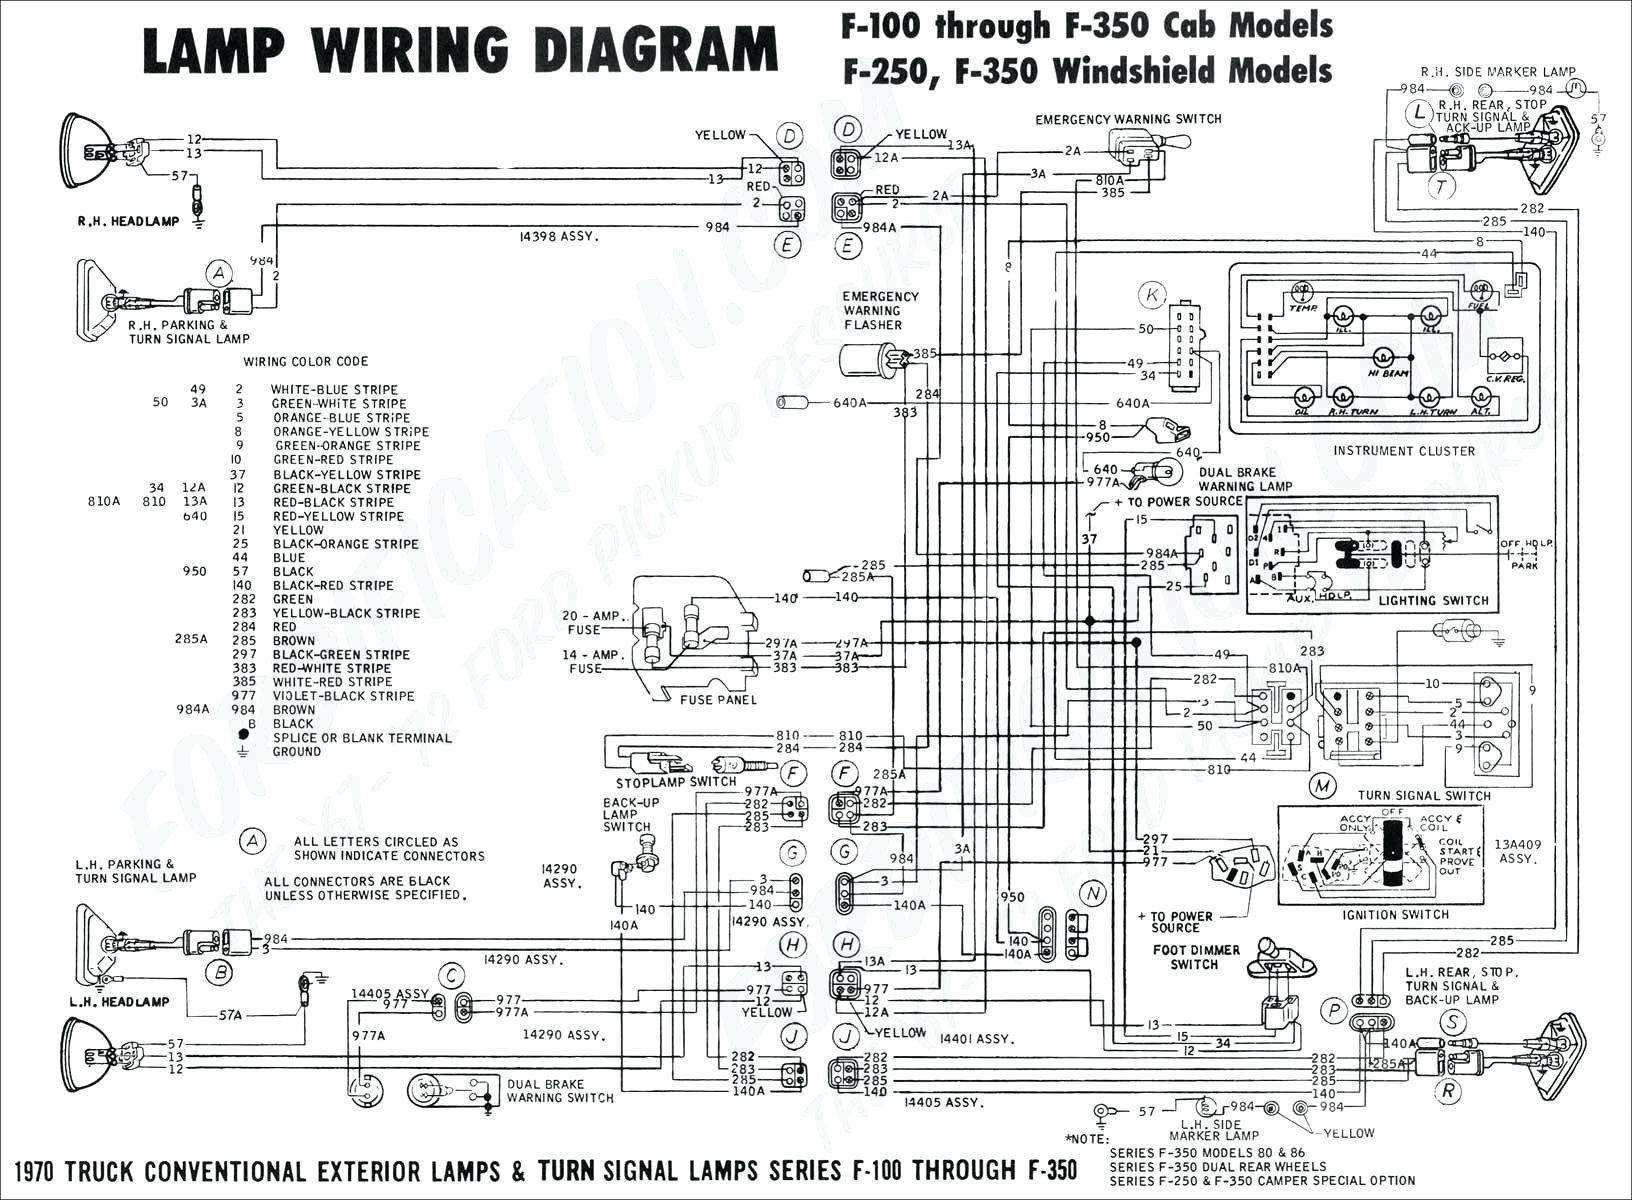 Volvo S60 Engine Diagram 2001 Dodge Durango Parts Diagram Start Building A Wiring Diagram • Of Volvo S60 Engine Diagram